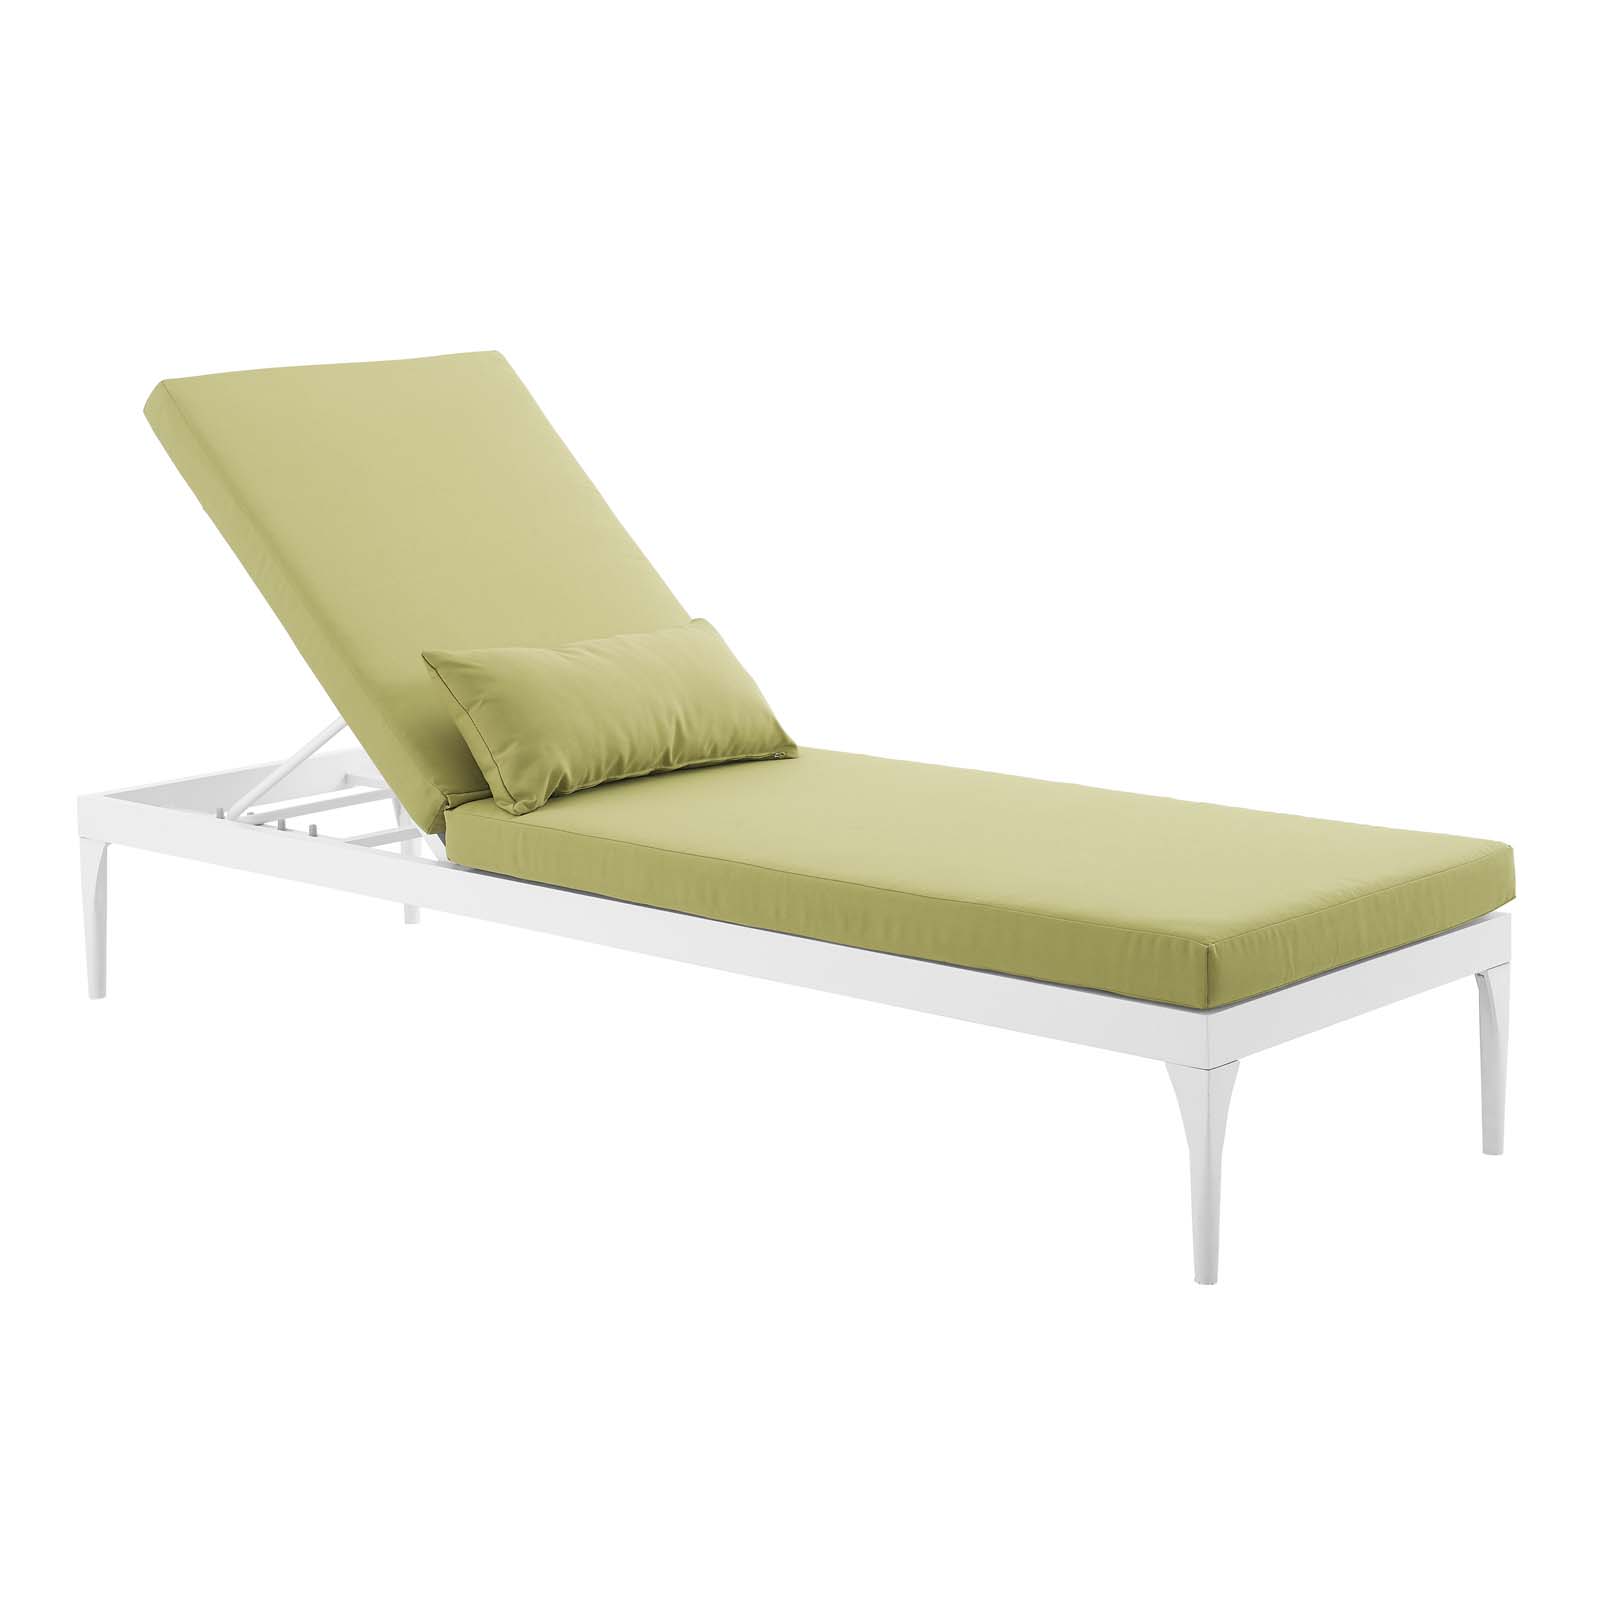 Modern Contemporary Urban Design Outdoor Patio Balcony Garden Furniture Lounge Chair Chaise, Fabric Aluminium, Green White - image 5 of 7